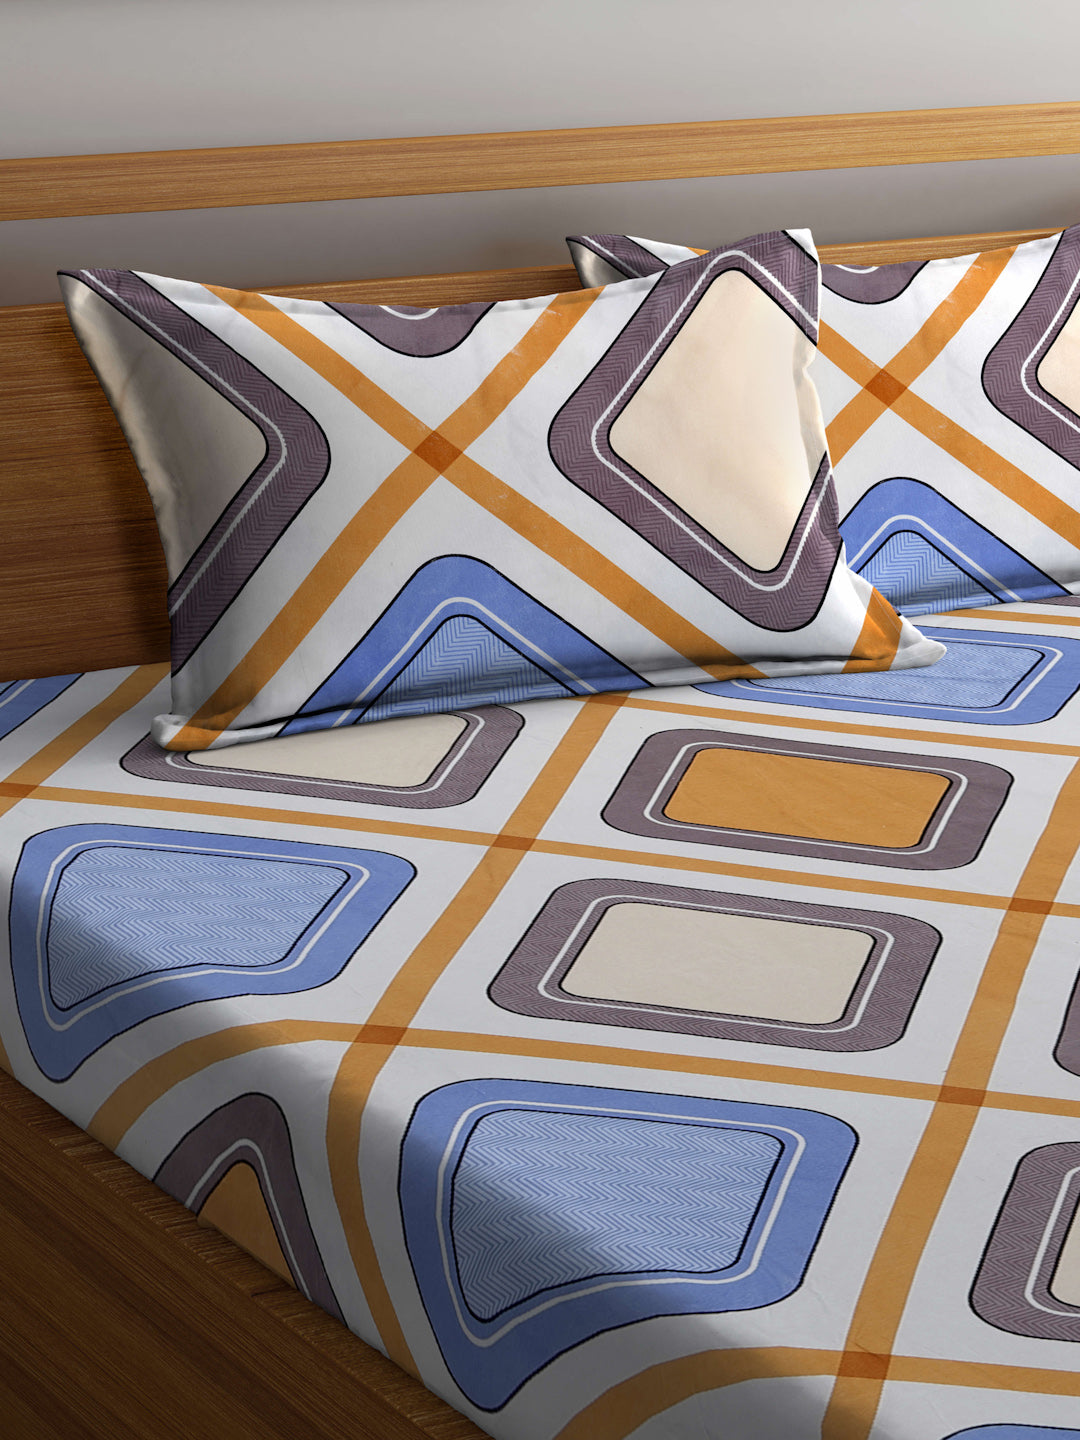 Klotthe Multi Geometric 300 TC Cotton Blend Elasticated Super King Double Bedsheet with 2 Pillow Covers (270X270 cm)